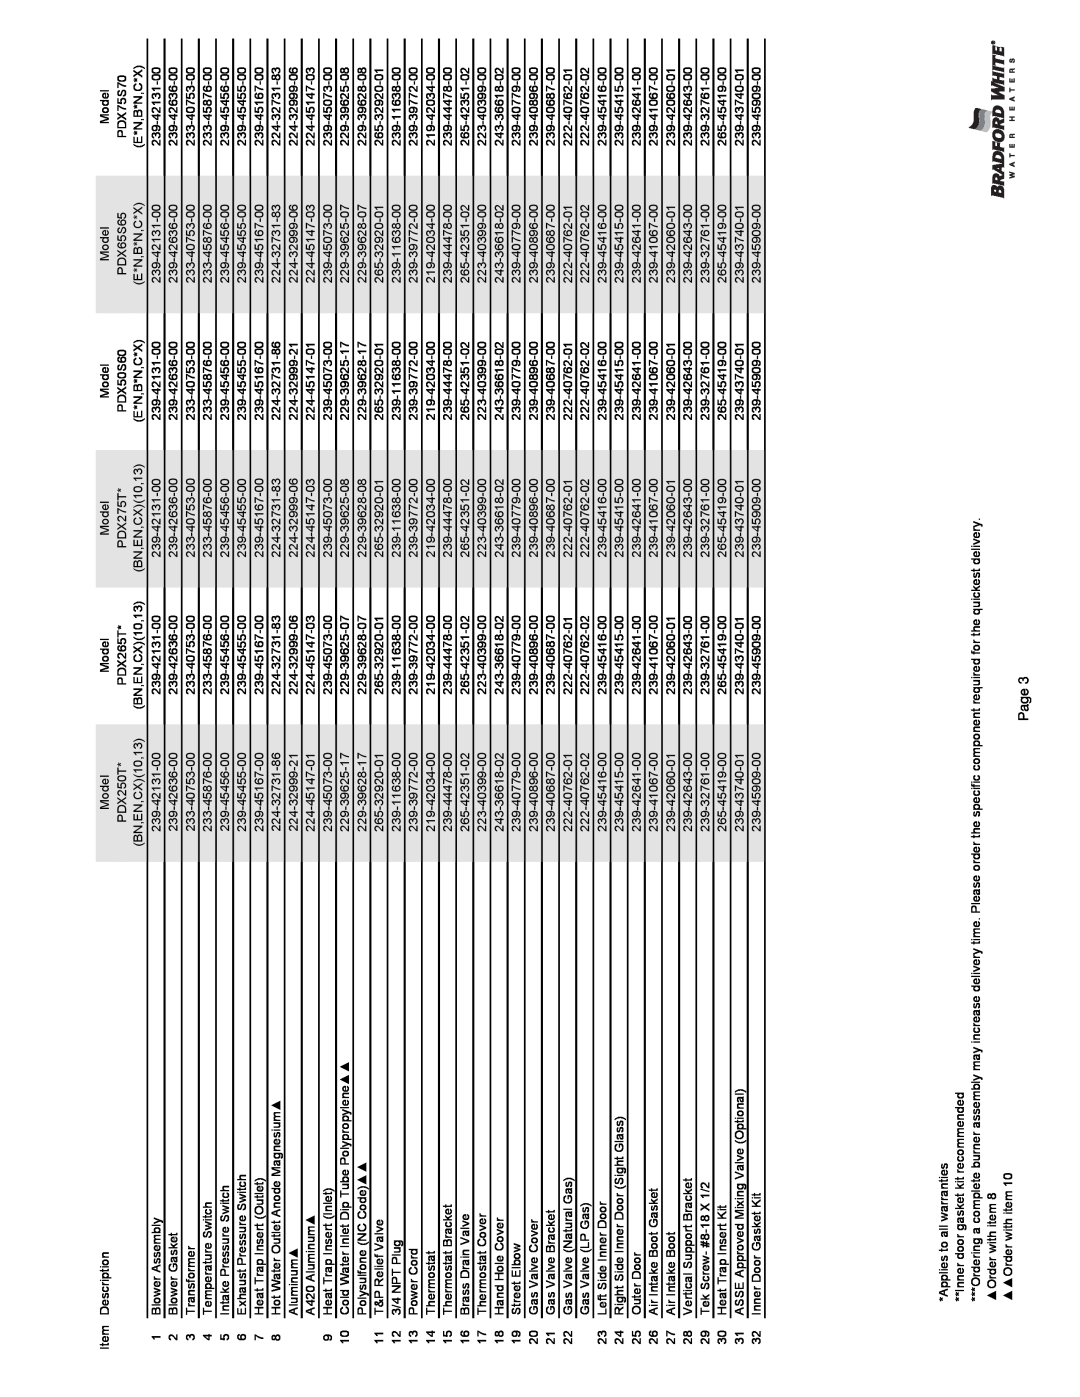 Bradford-White Corp PDX2 dimensions Page 